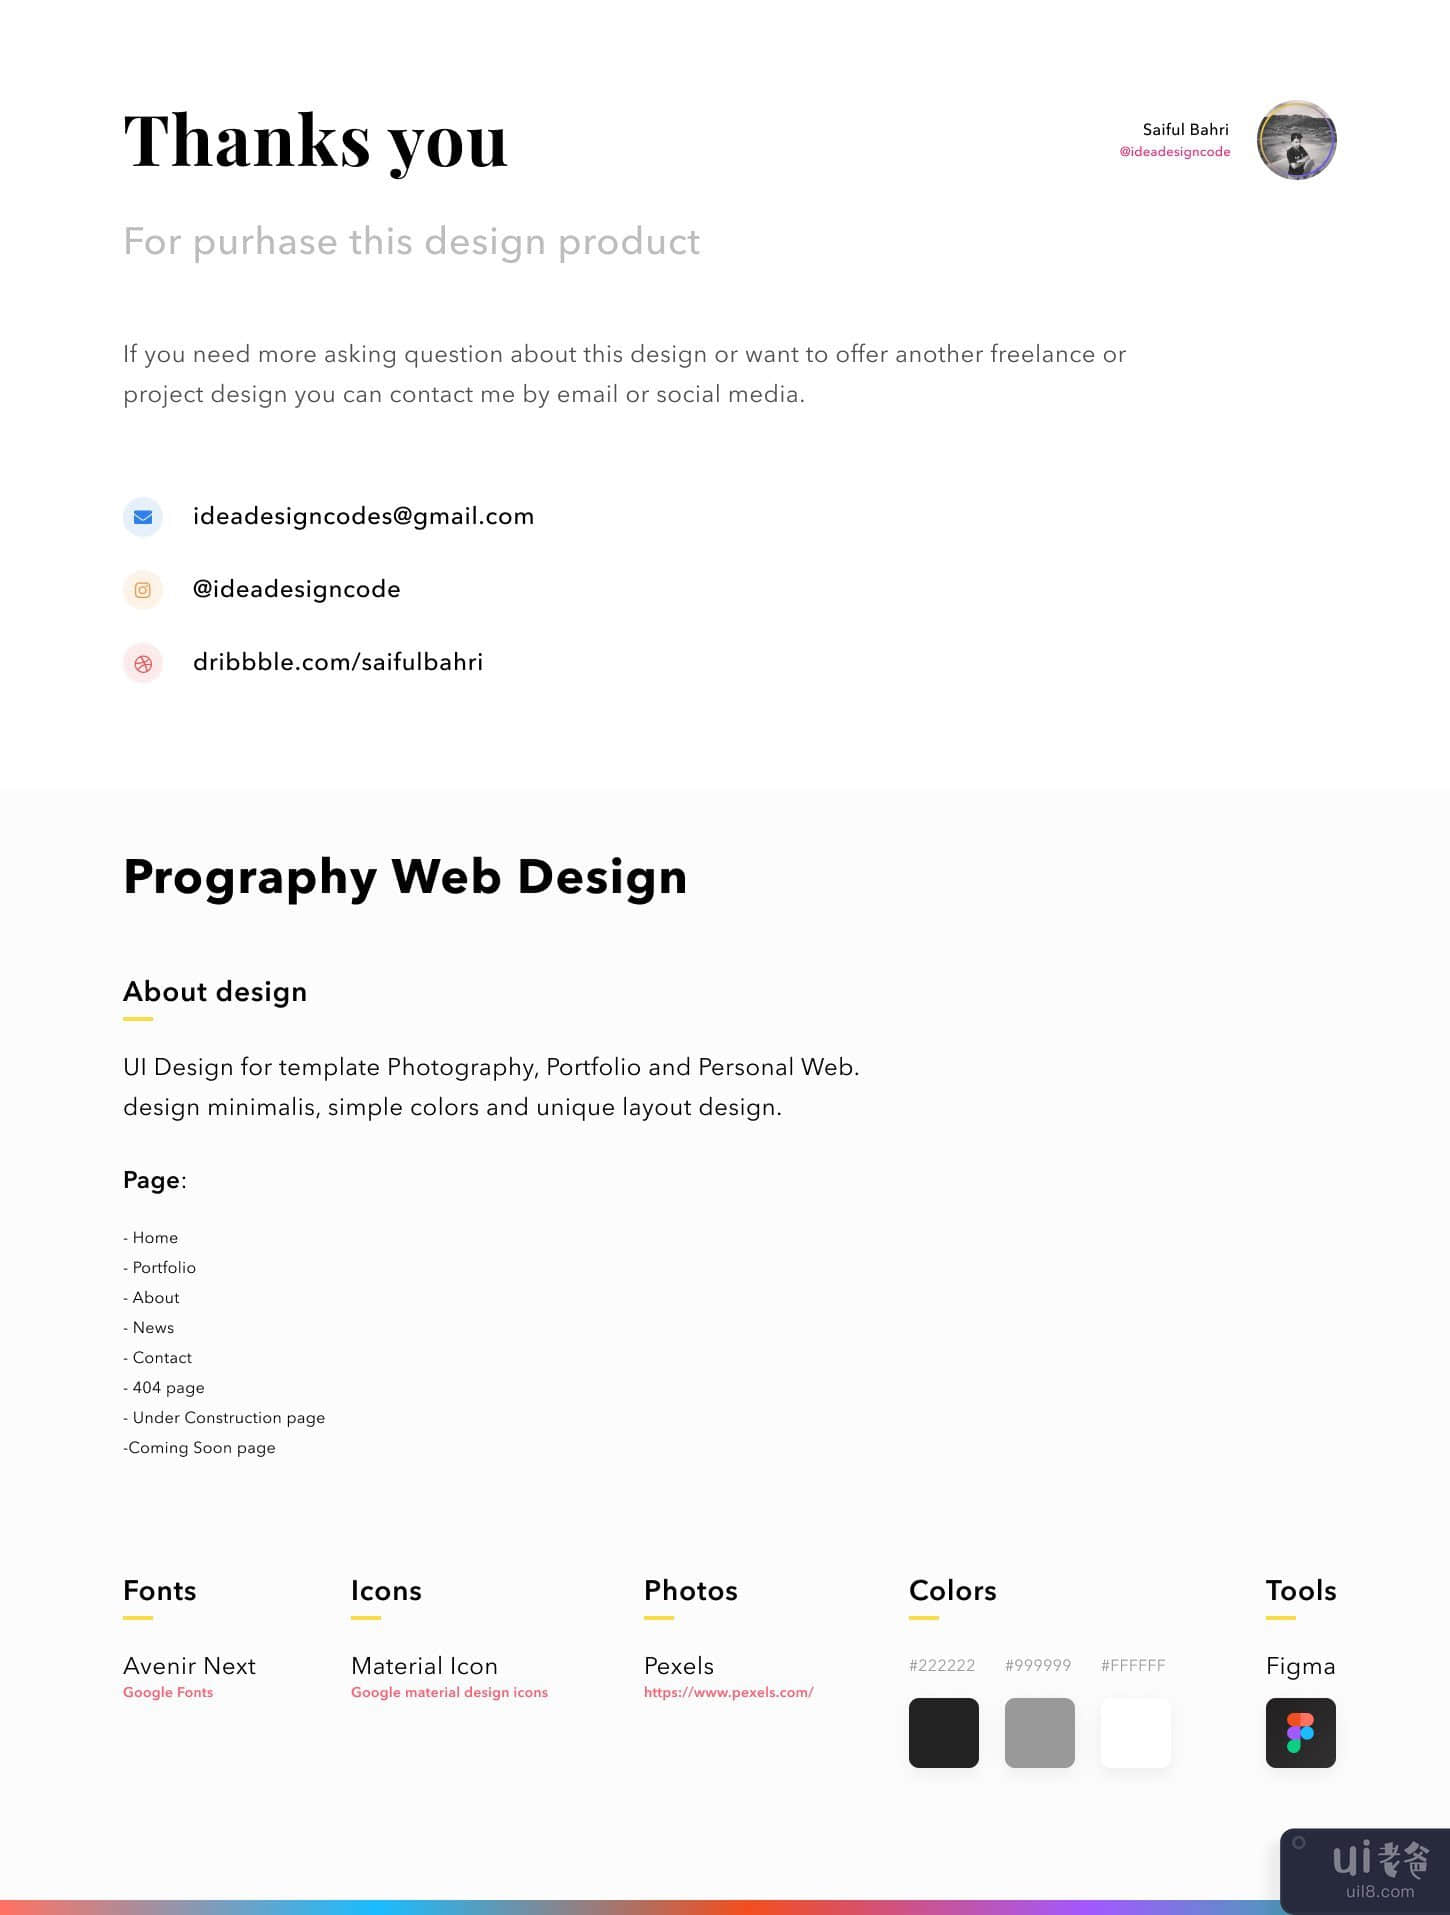 Prography个人投资组合网页设计(Prography personal portfolio web design)插图